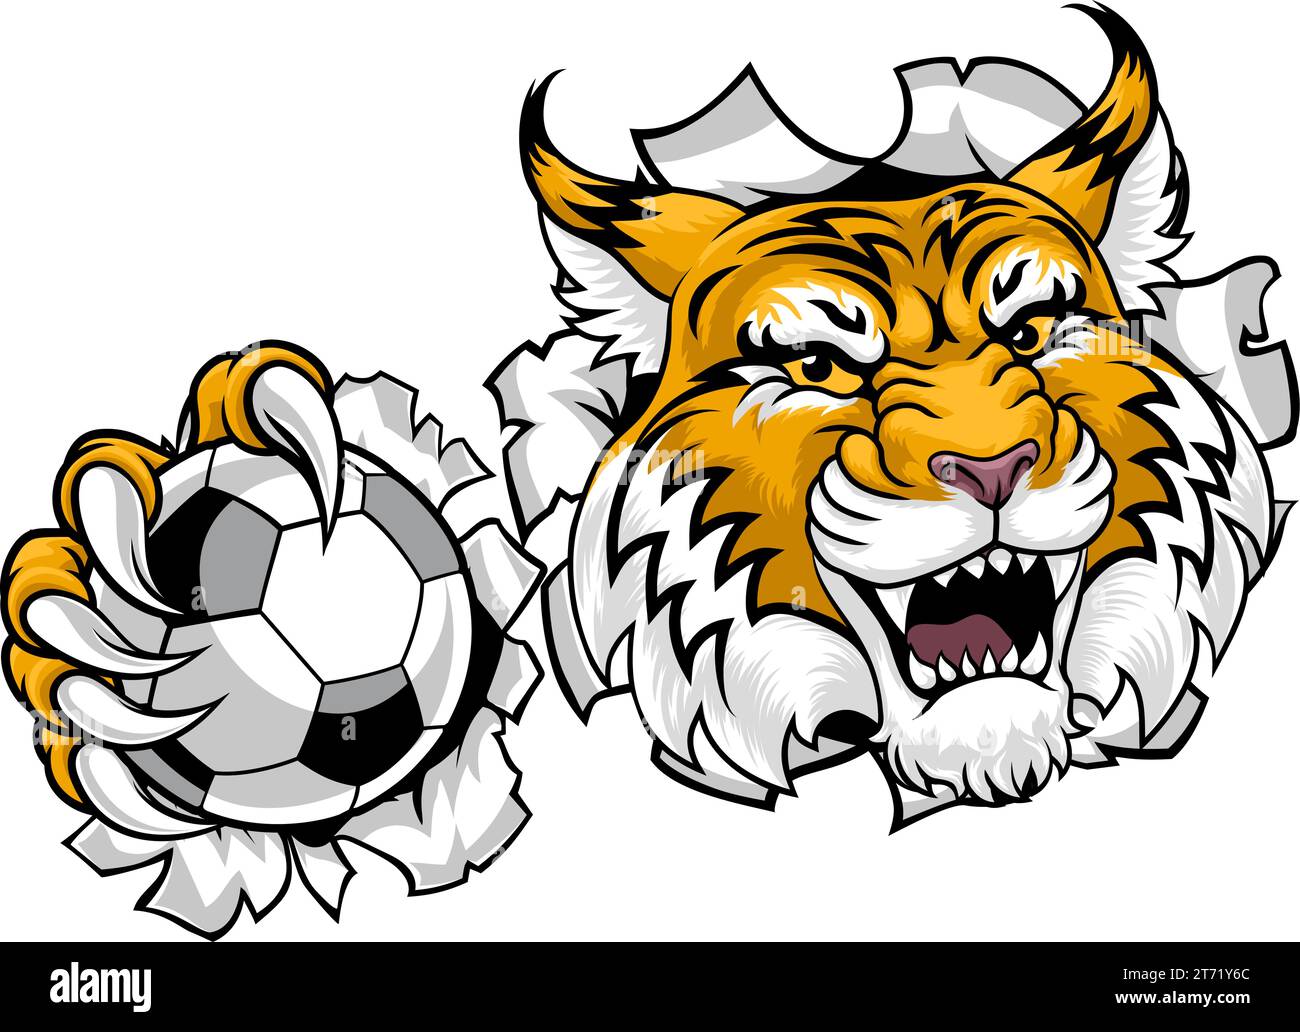 Wildcat Bobcat Soccer Football Animal Team Mascot Stock Vector